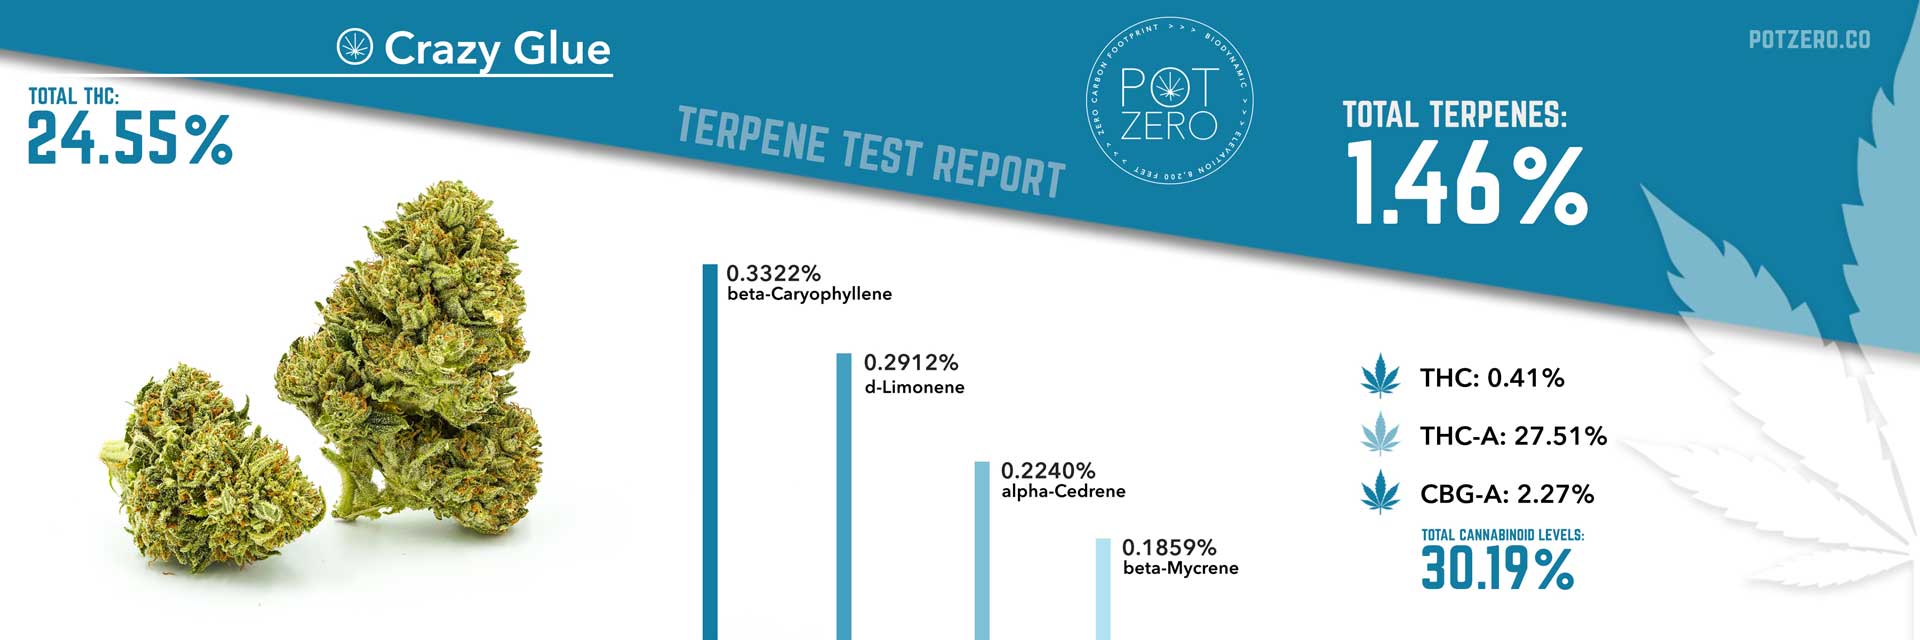 crazy glue strain terpene test report